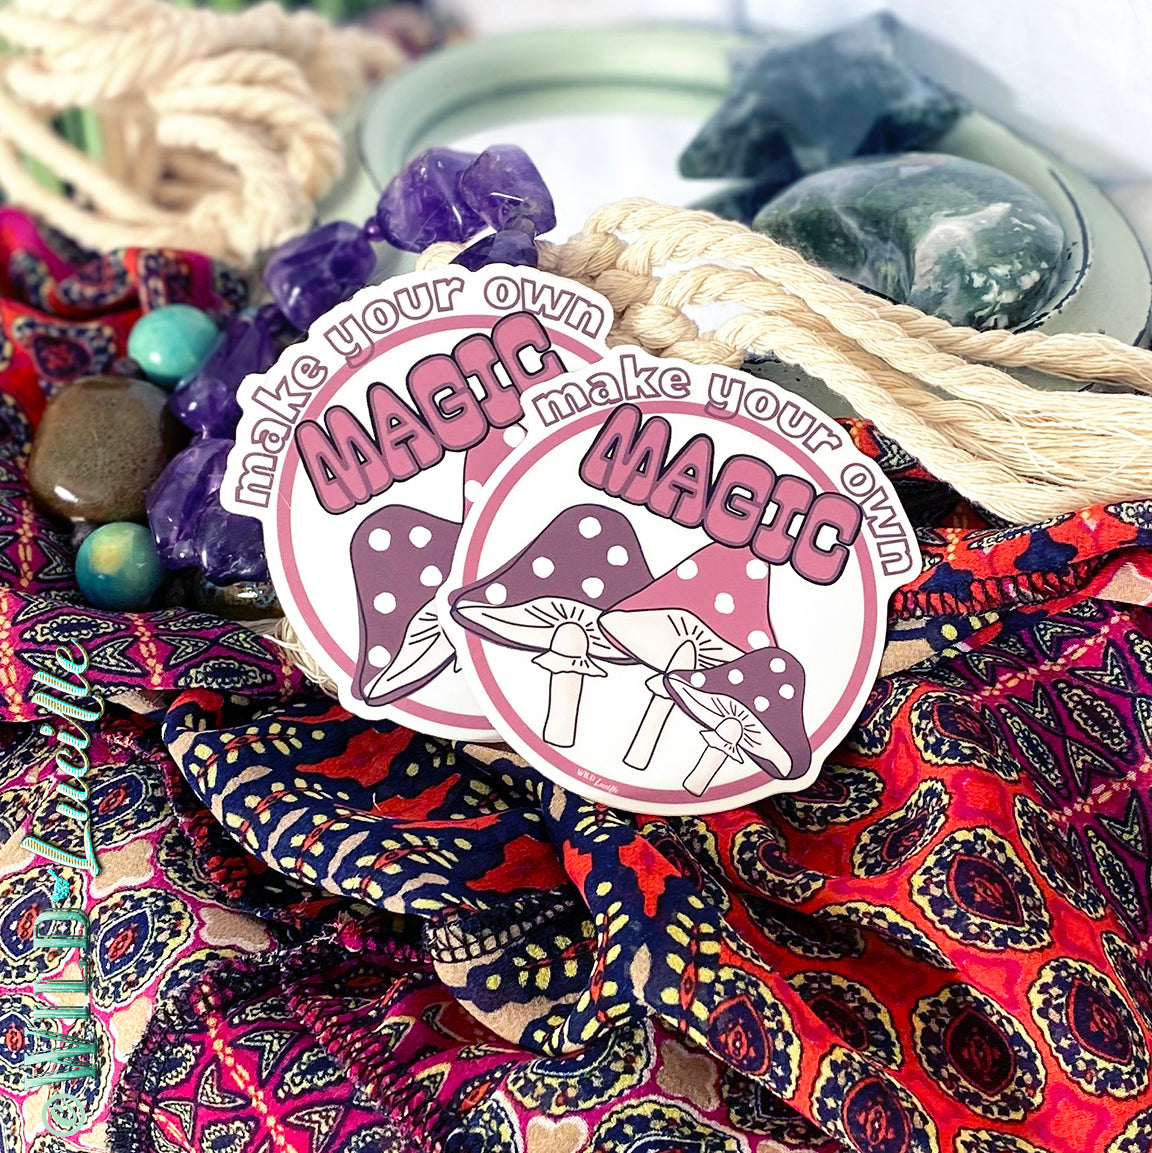 Make Your Own Magic Mushrooms - Vinyl Sticker Decals